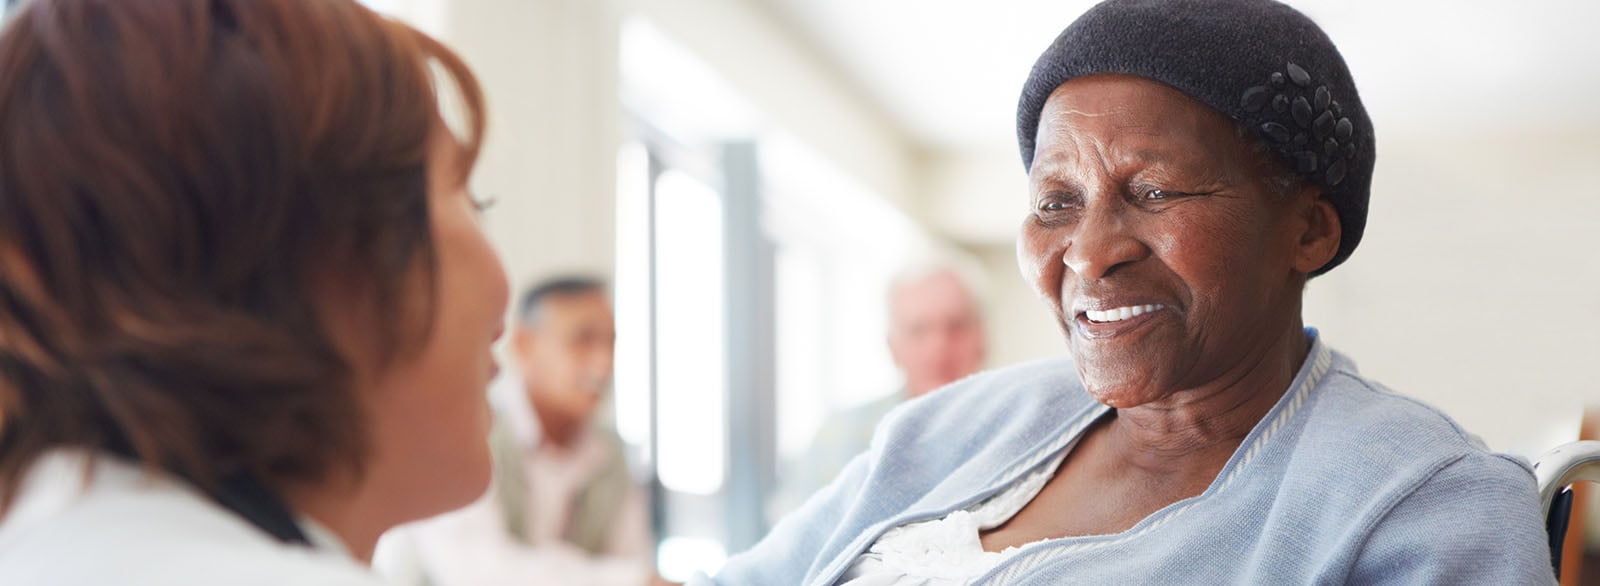 Provider speaking with elderly female patient